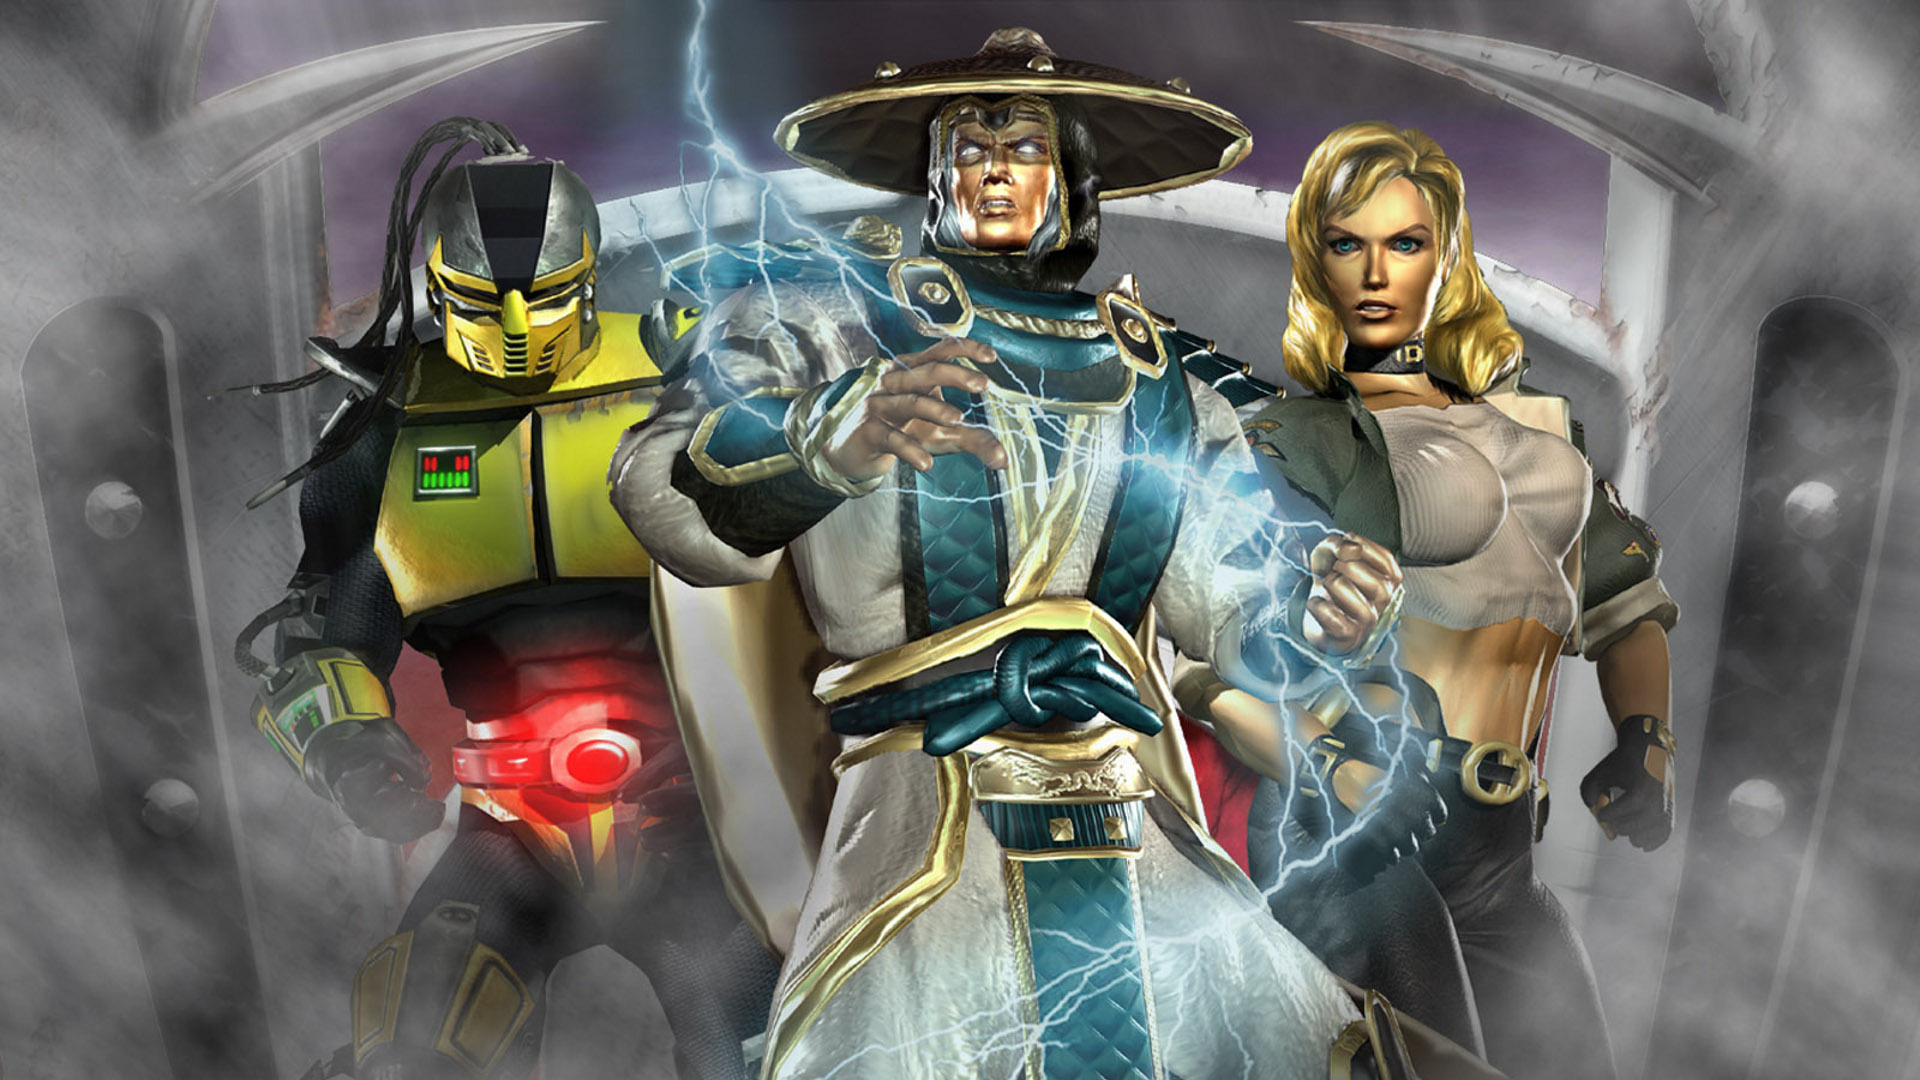 Video Game Mortal Kombat: Deadly Alliance HD Wallpaper | Background Image